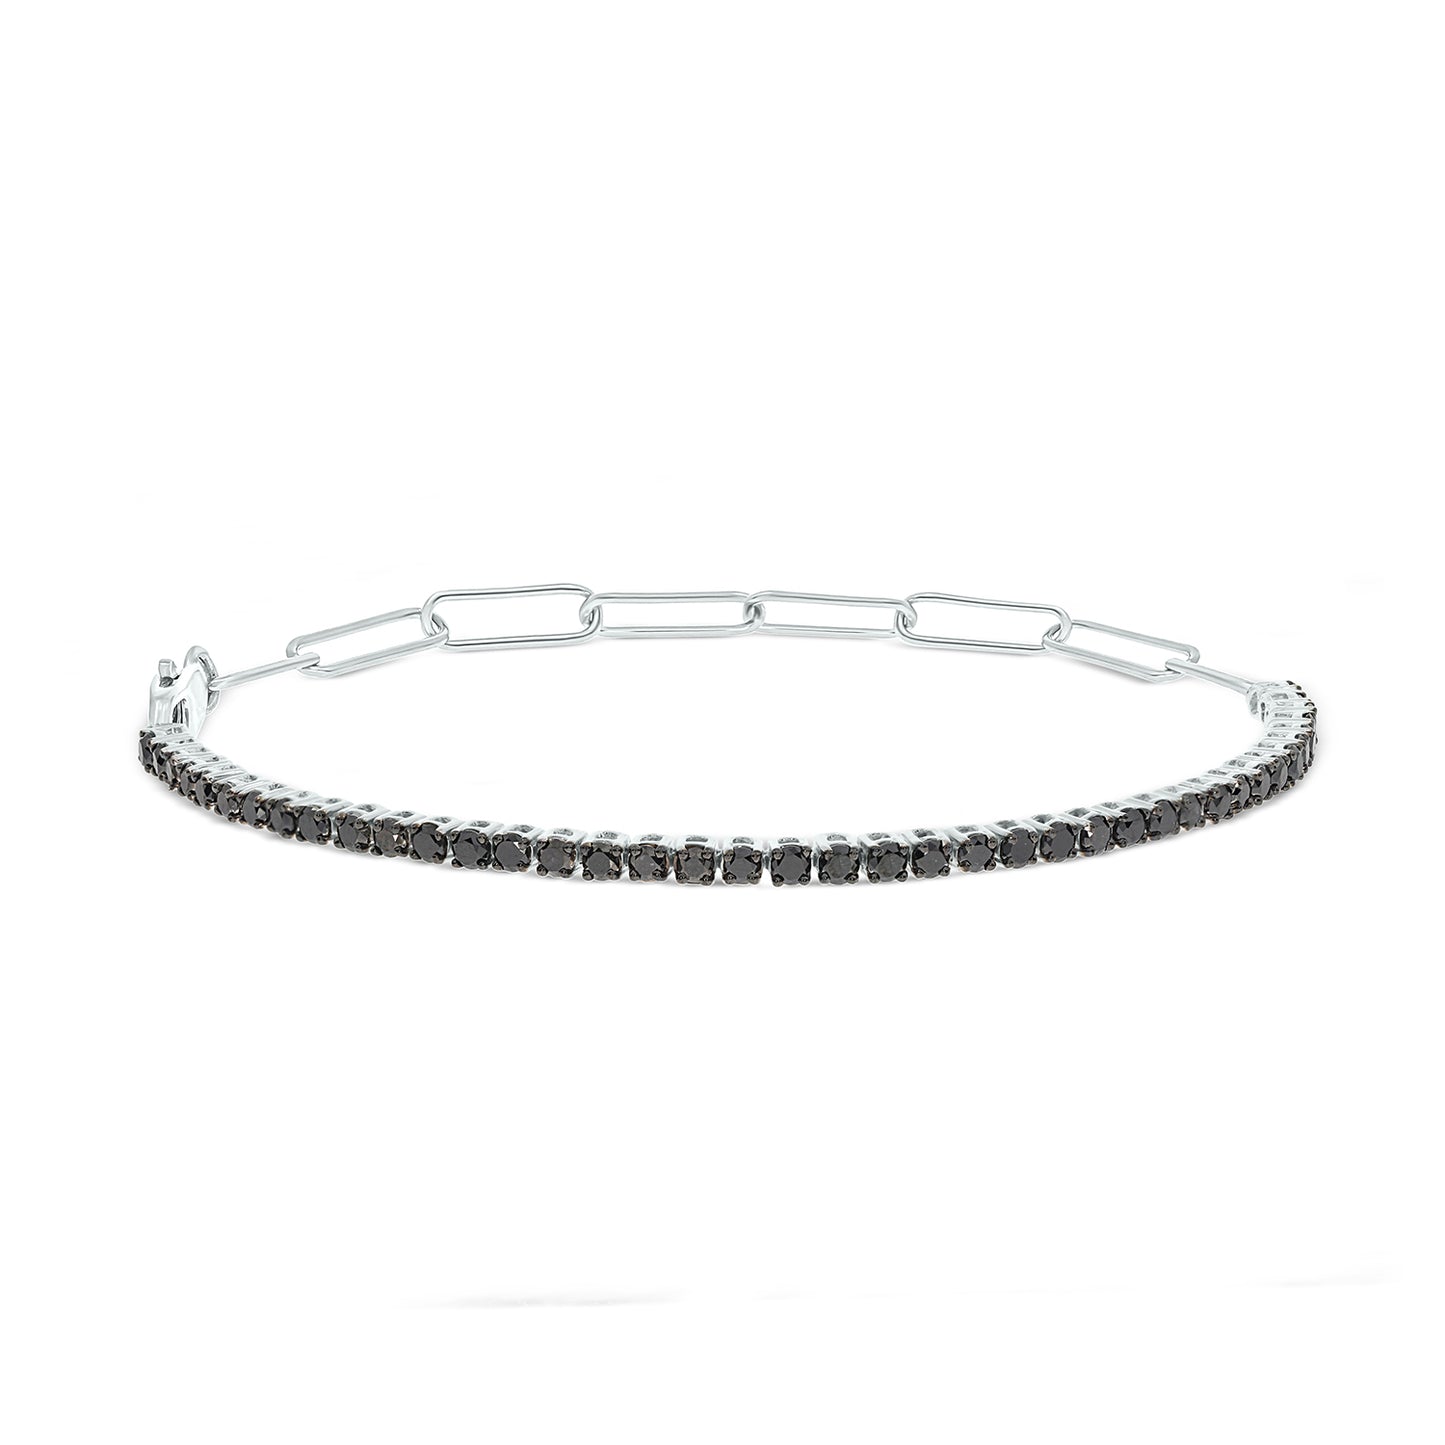 Paper Clip & Tennis Bracelet in 925 Sterling Silver- White Sapphire, Blue Sapphire, Black Diamonds